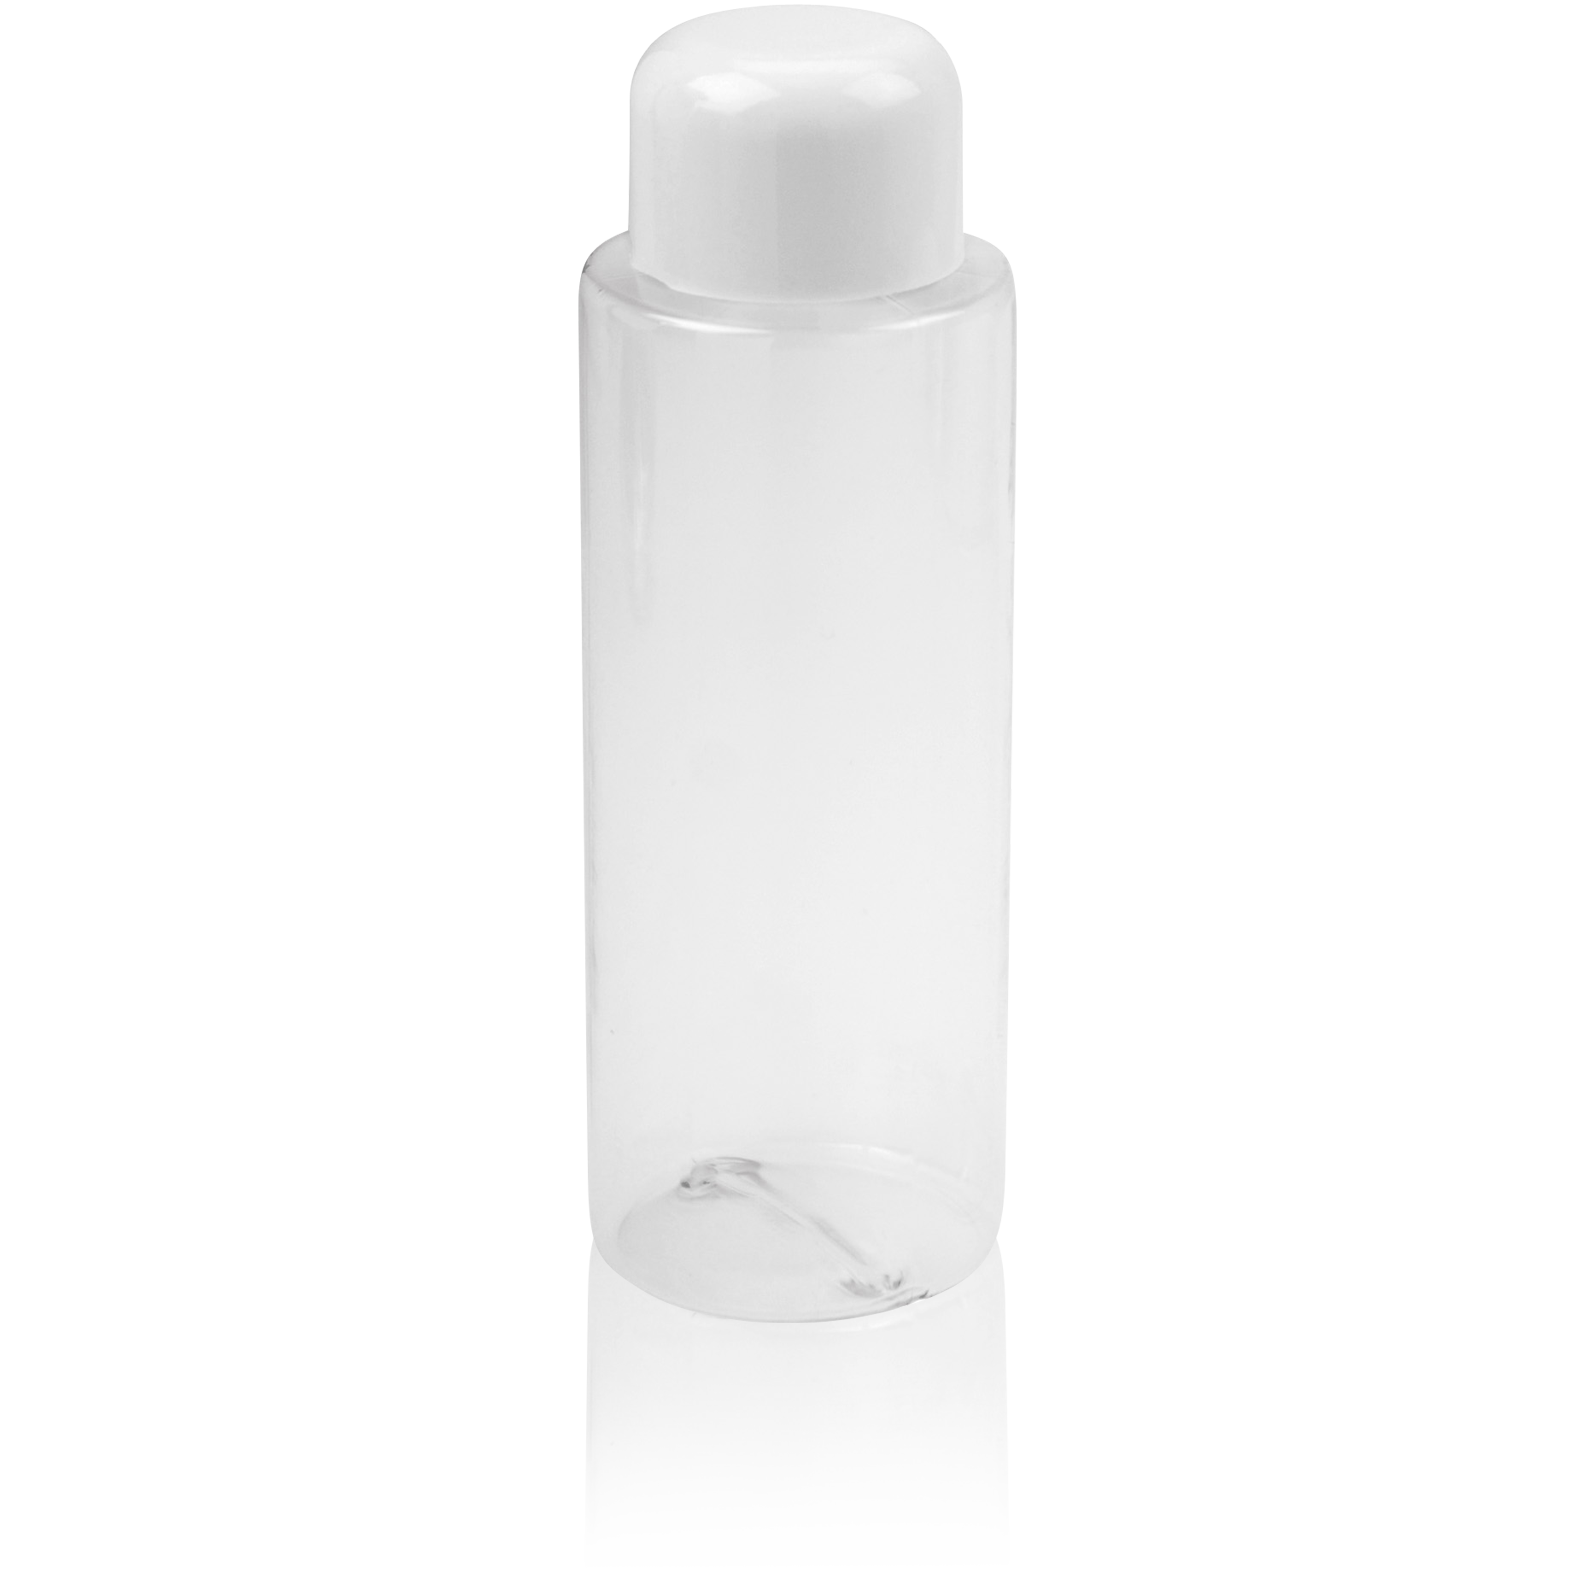 leerflasche-aus-kunststoff-fur-75-ml_30402